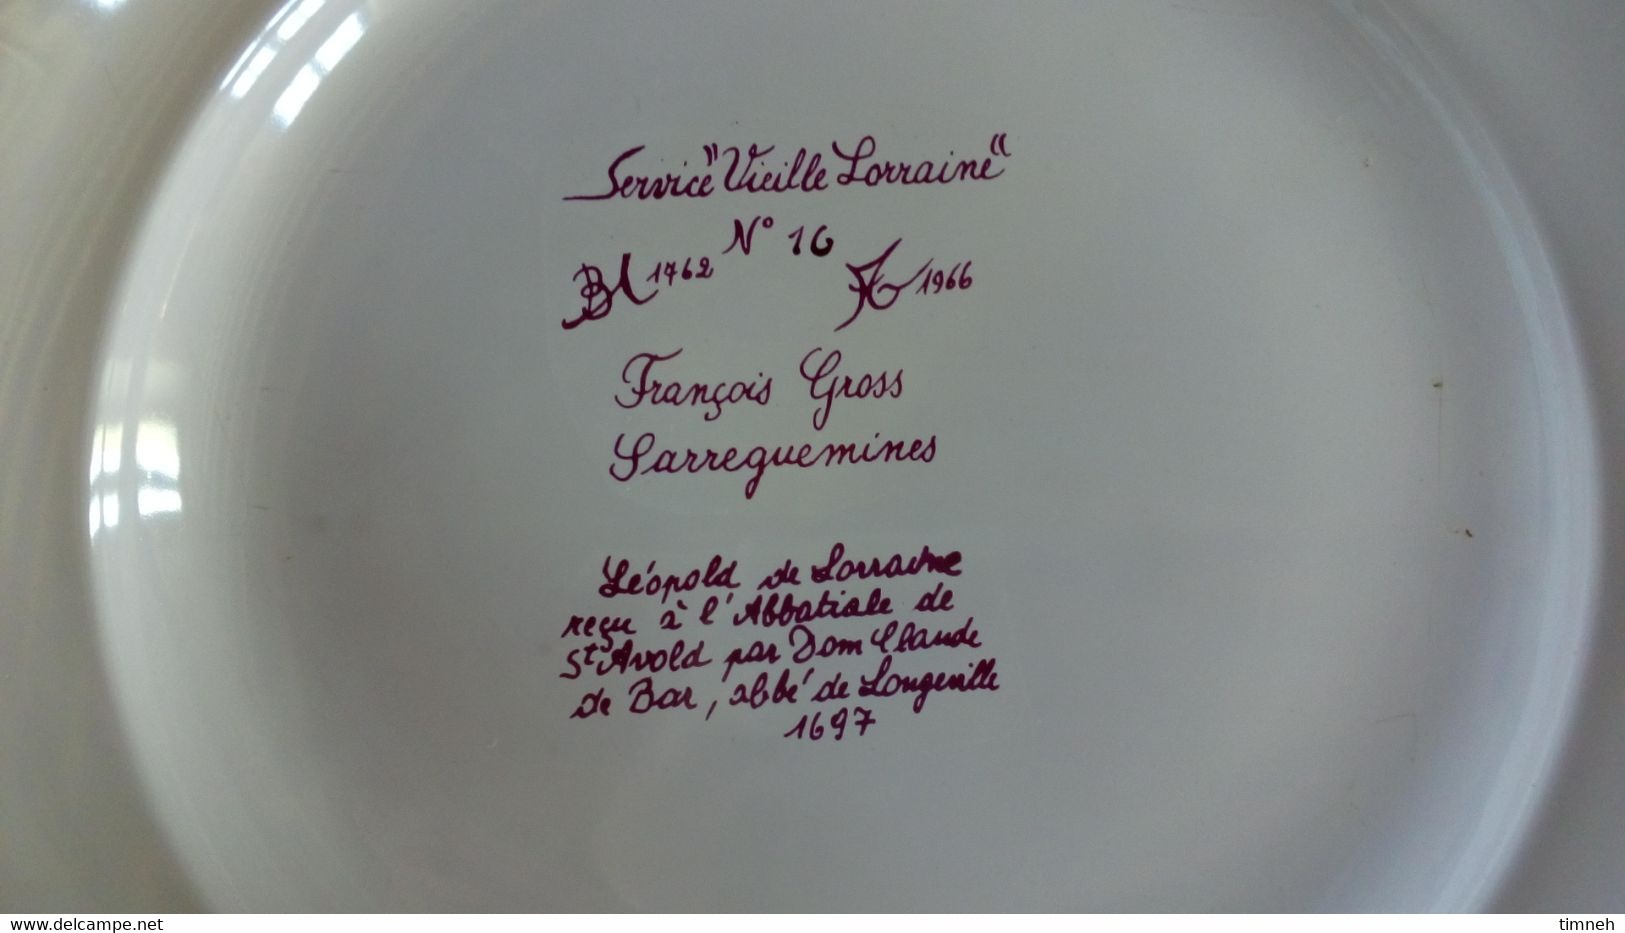 François GROSS Sarreguemines Assiette Plate - ABBAYE DE ST AVOLD 1697- Service Vieille Lorraine 1966 Bicentenaire - Sarreguemines (FRA)